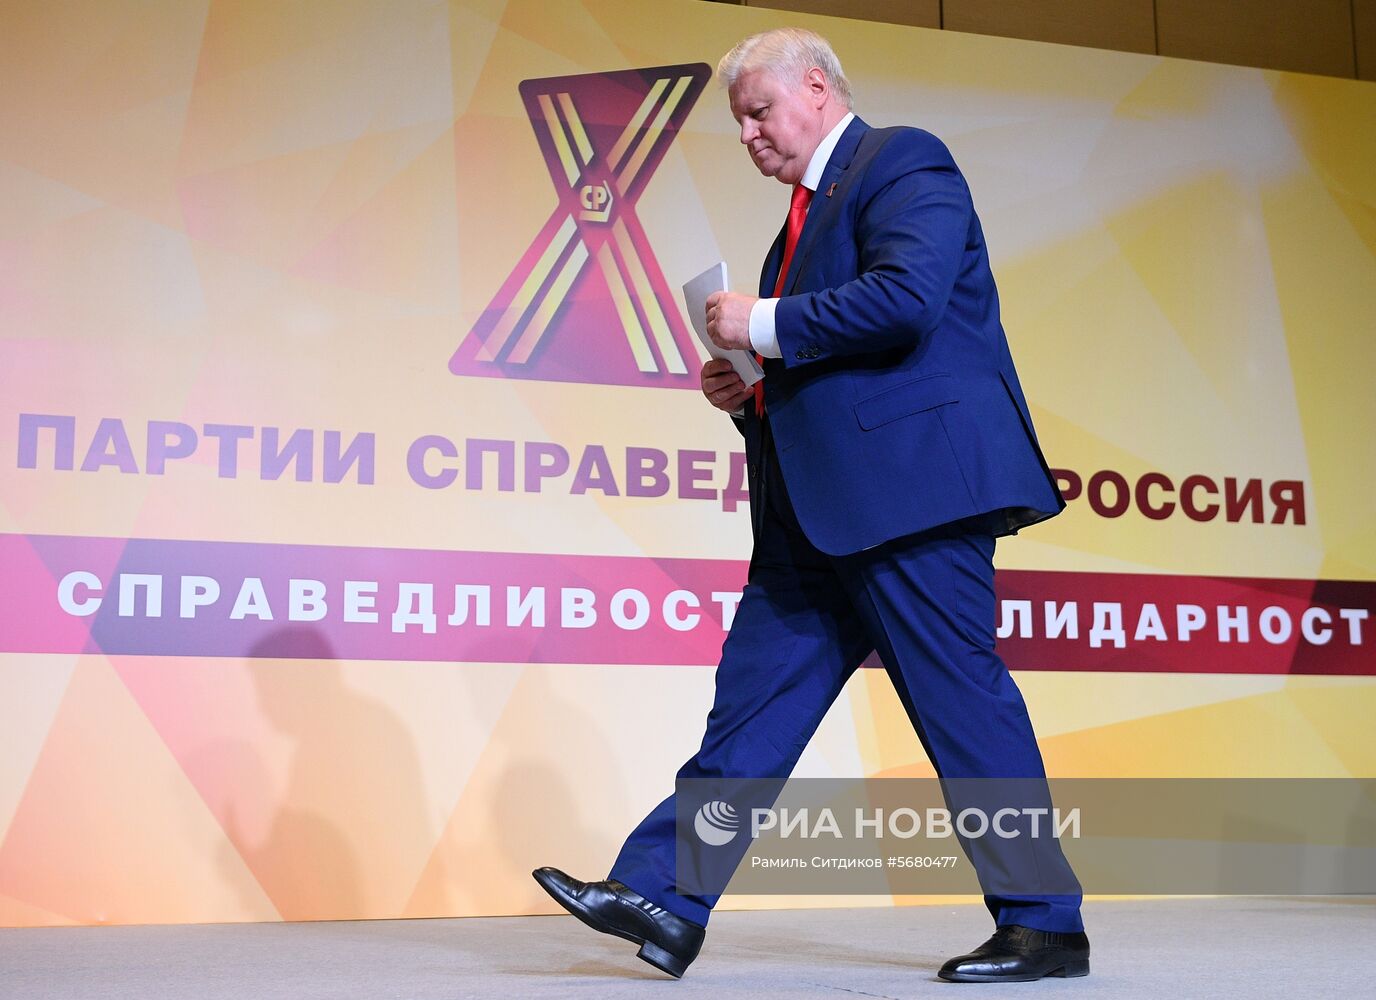 10-й съезд партии "Справедливая Россия"